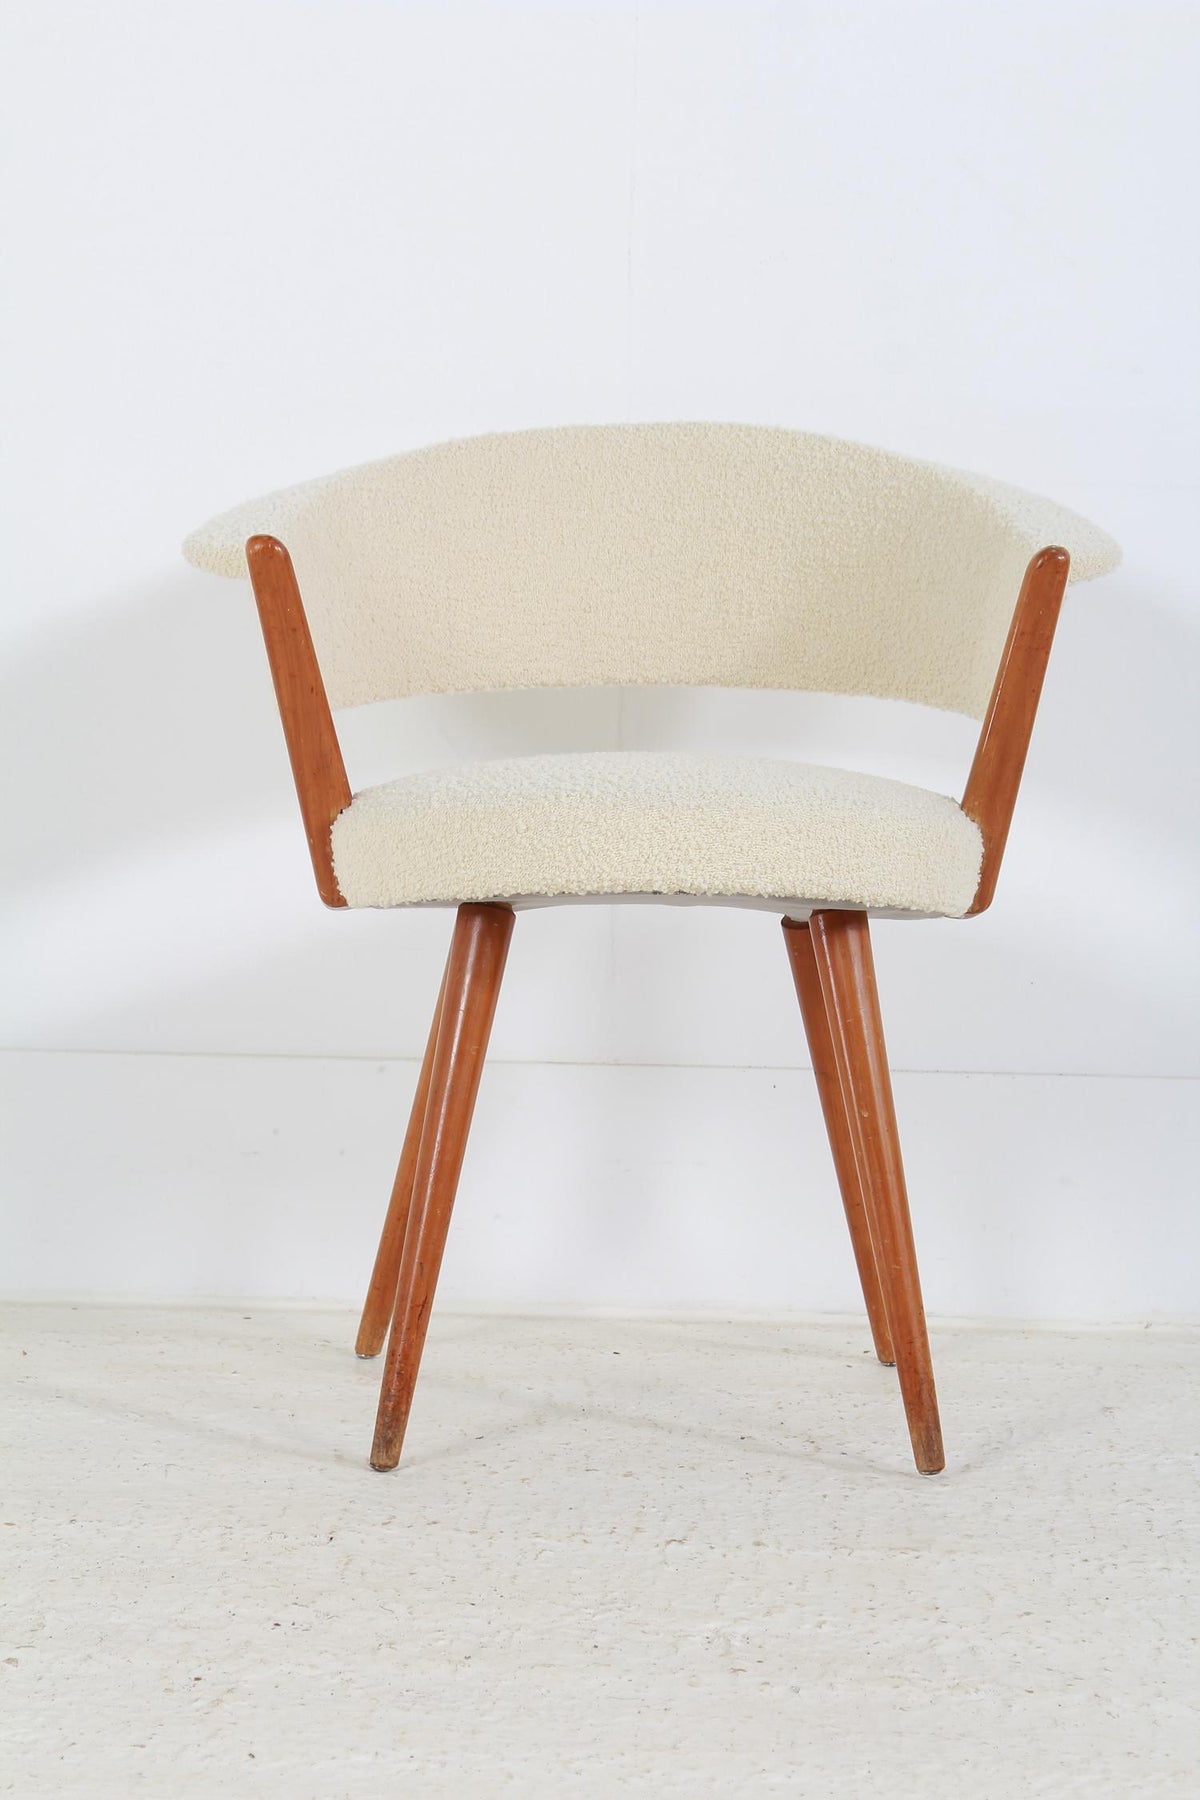 Stylish 1950s Teak Chair by Hans Mitzlaff for Soloform Germany